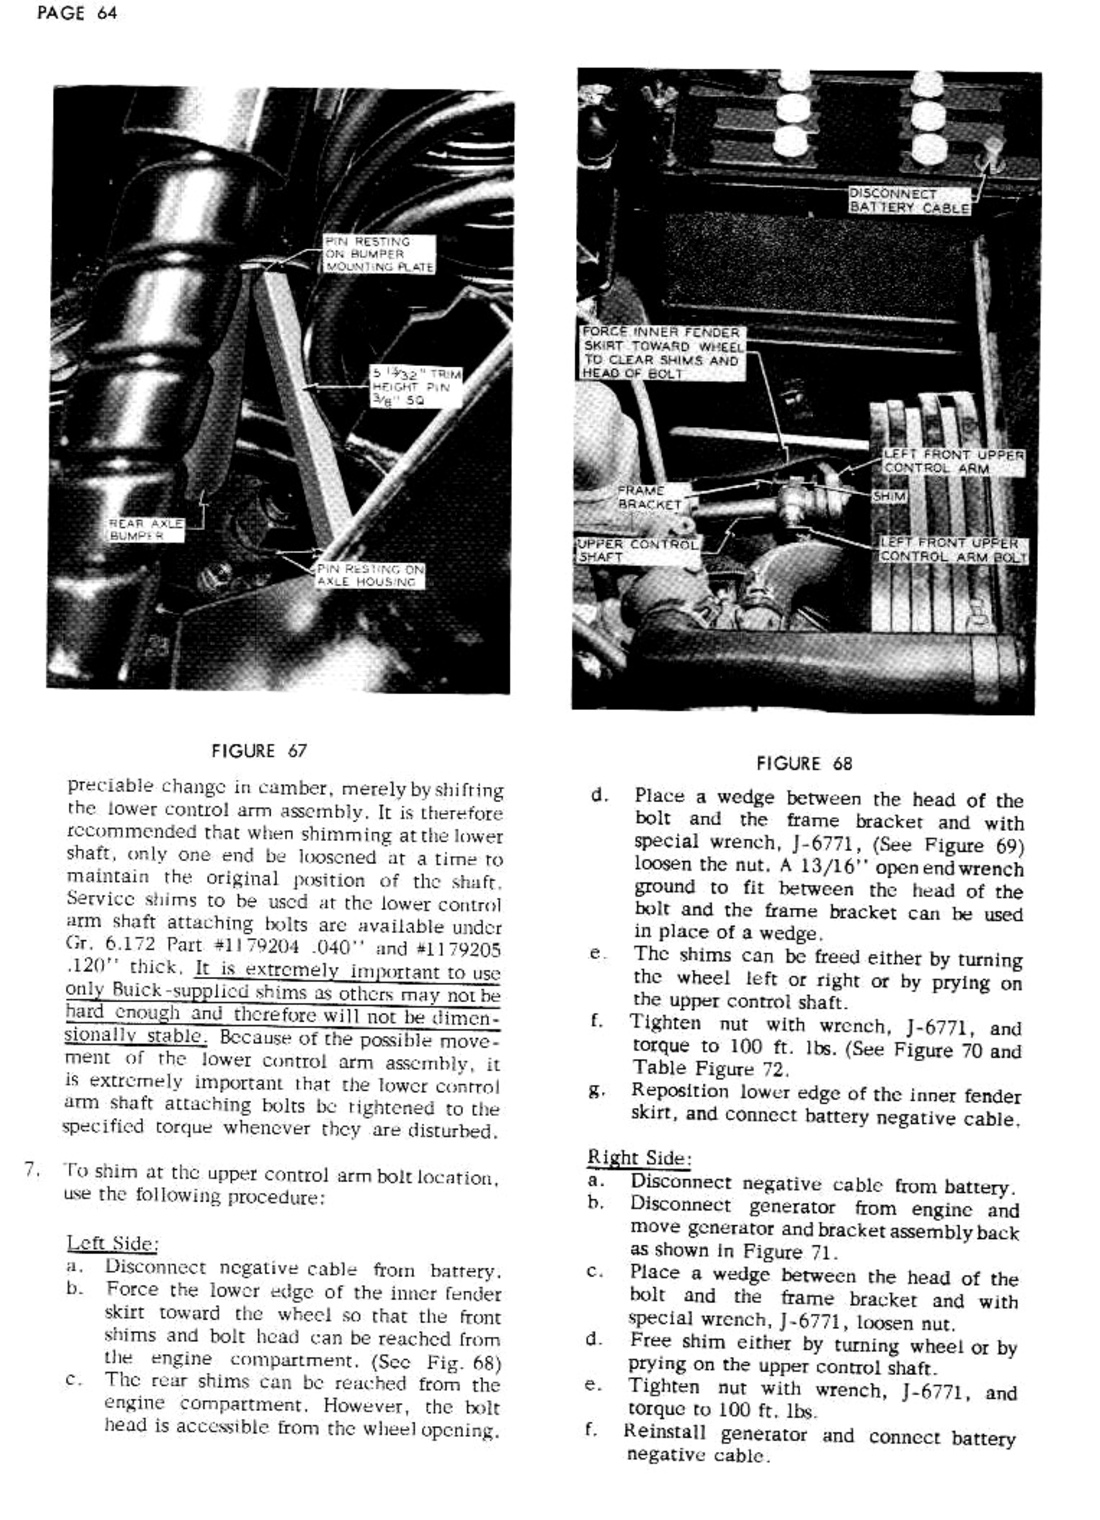 n_1957 Buick Product Service  Bulletins-069-069.jpg